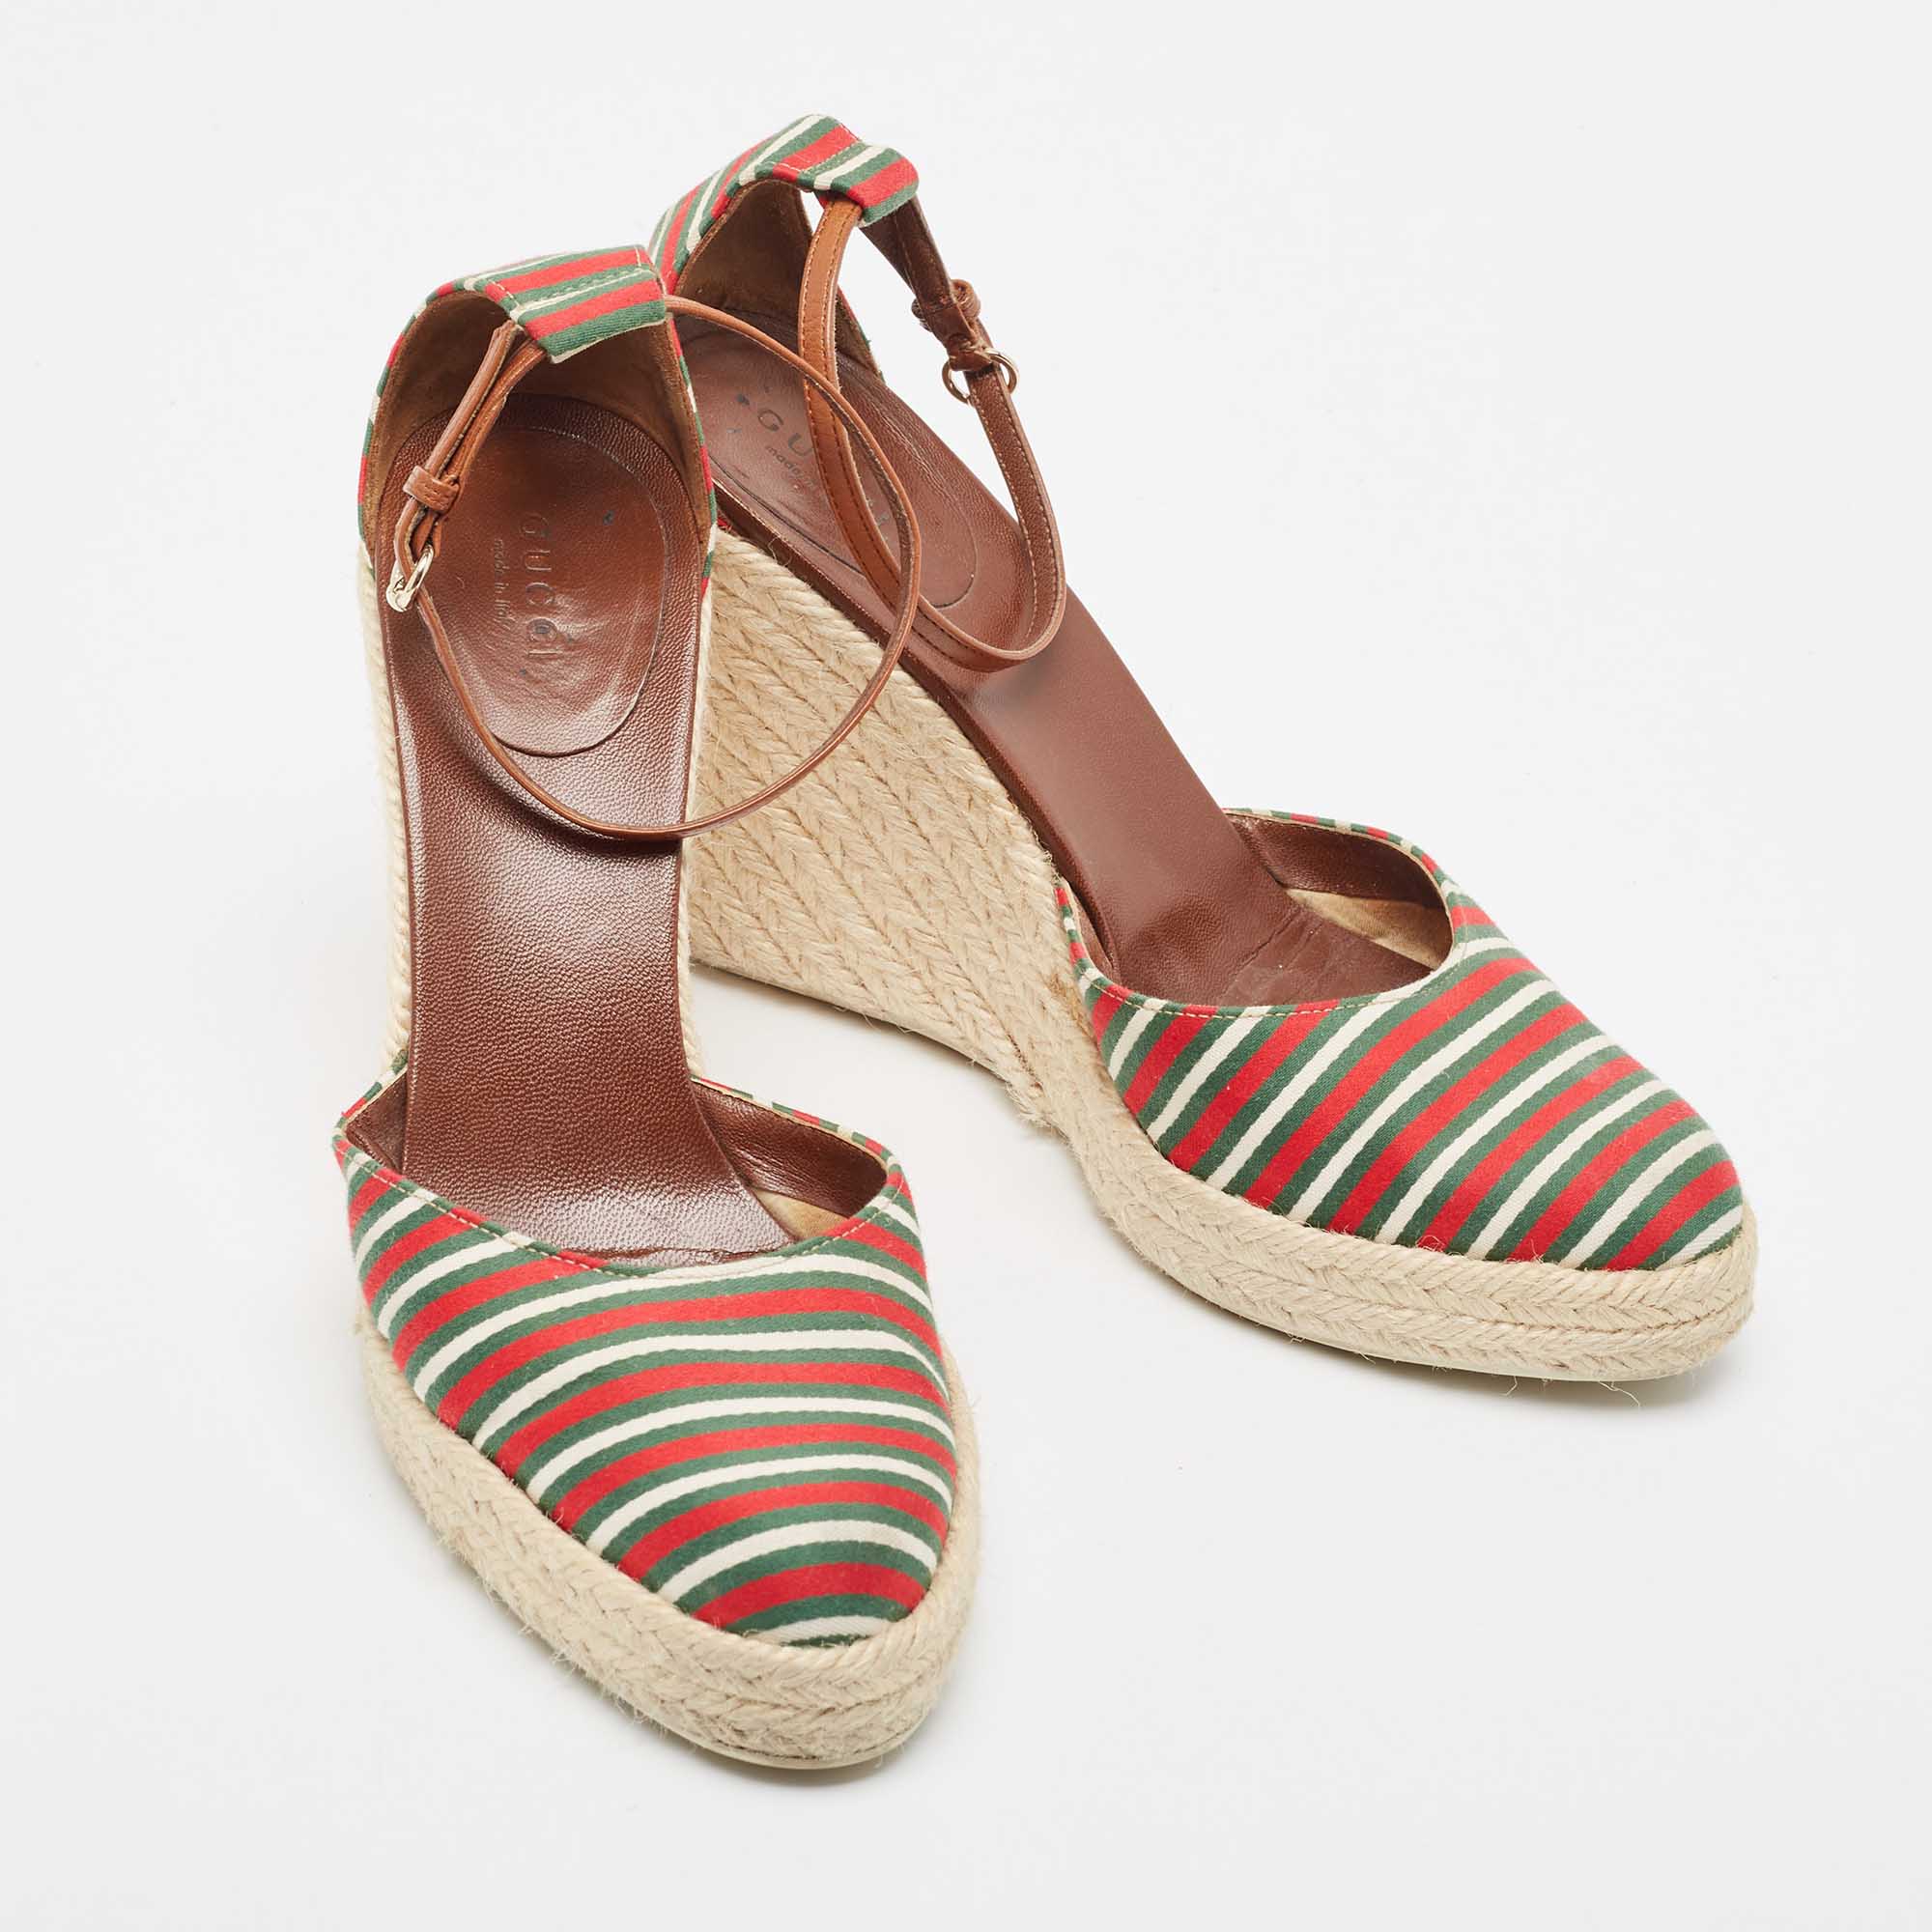 Gucci Multicolor Fabric Platform Wedge Espadrille Sandals Size 38